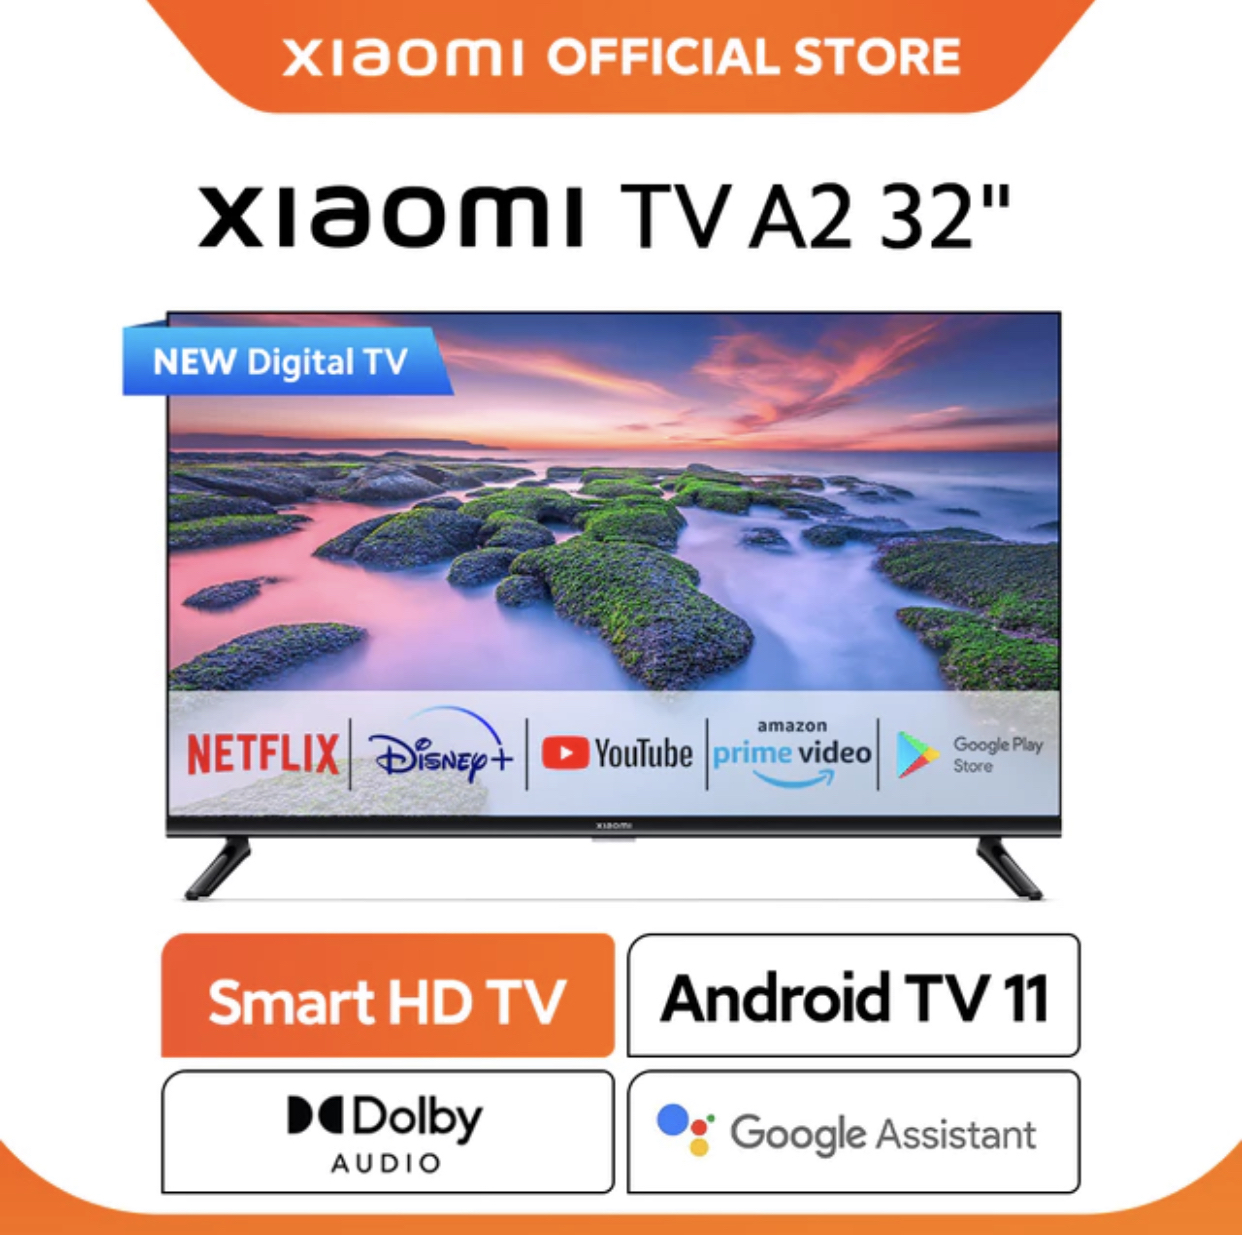 20. Xiaomi TV A2 32"